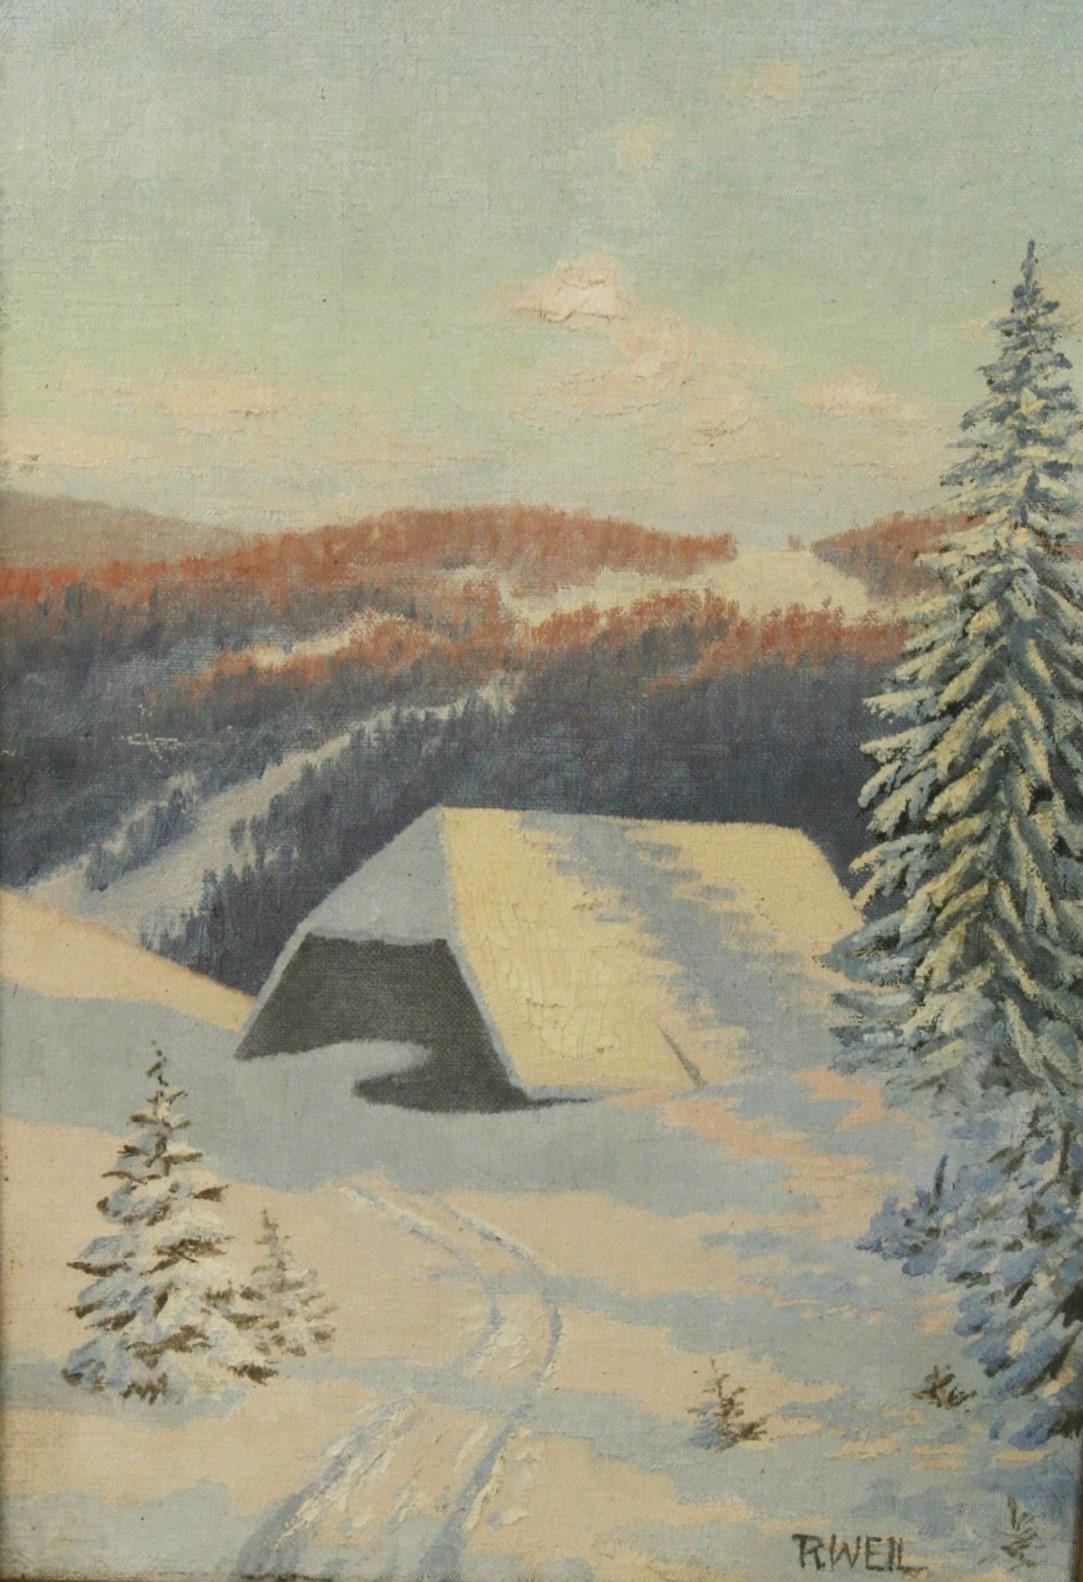 R.Weil Landscape Painting - Swedish School "Quiet Winter" Snow Scene Landscape 1960